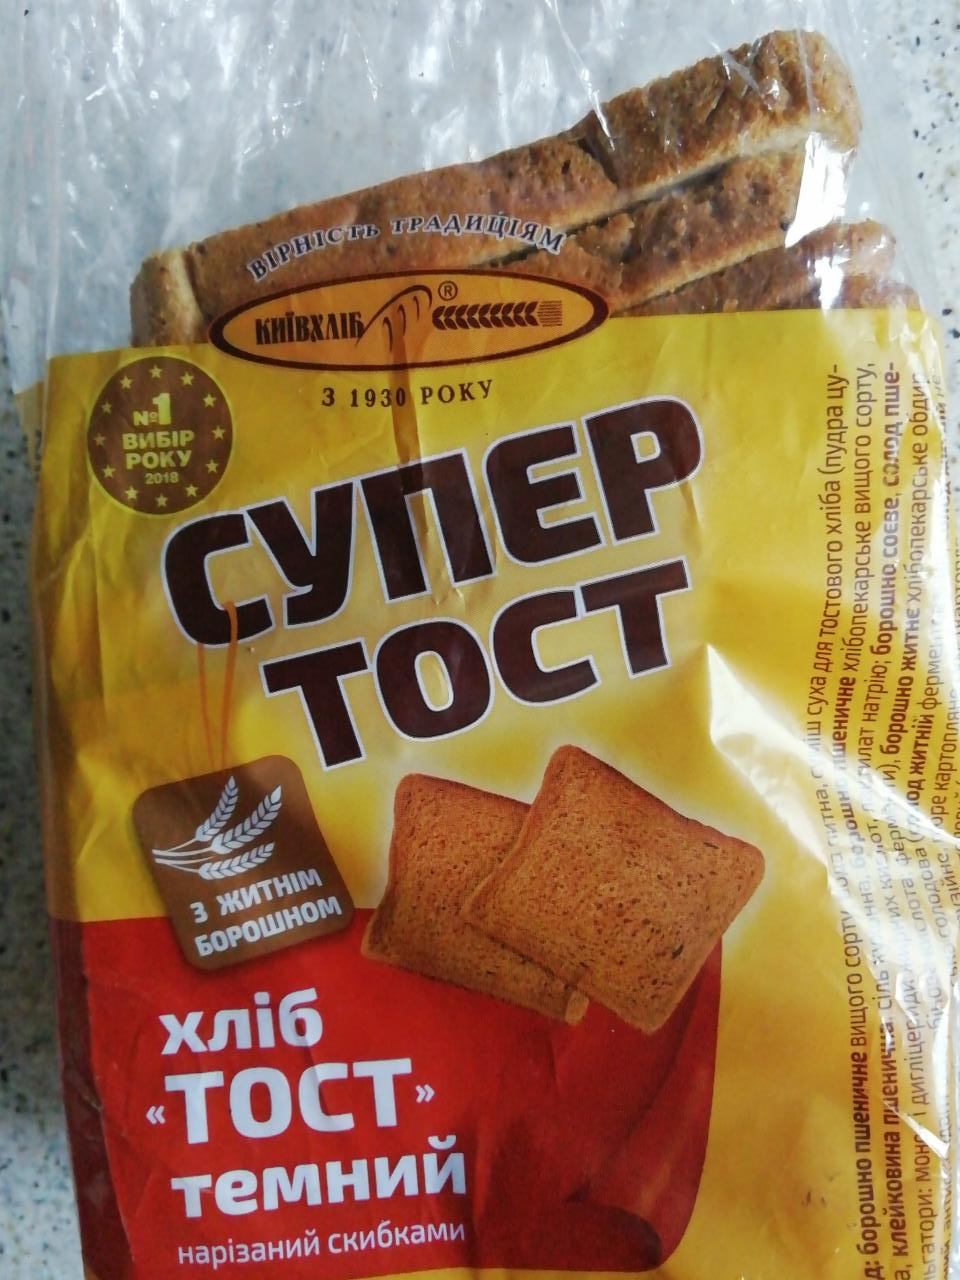 Фото - хлеб тост темный супер тост Киевхлеб Київхліб